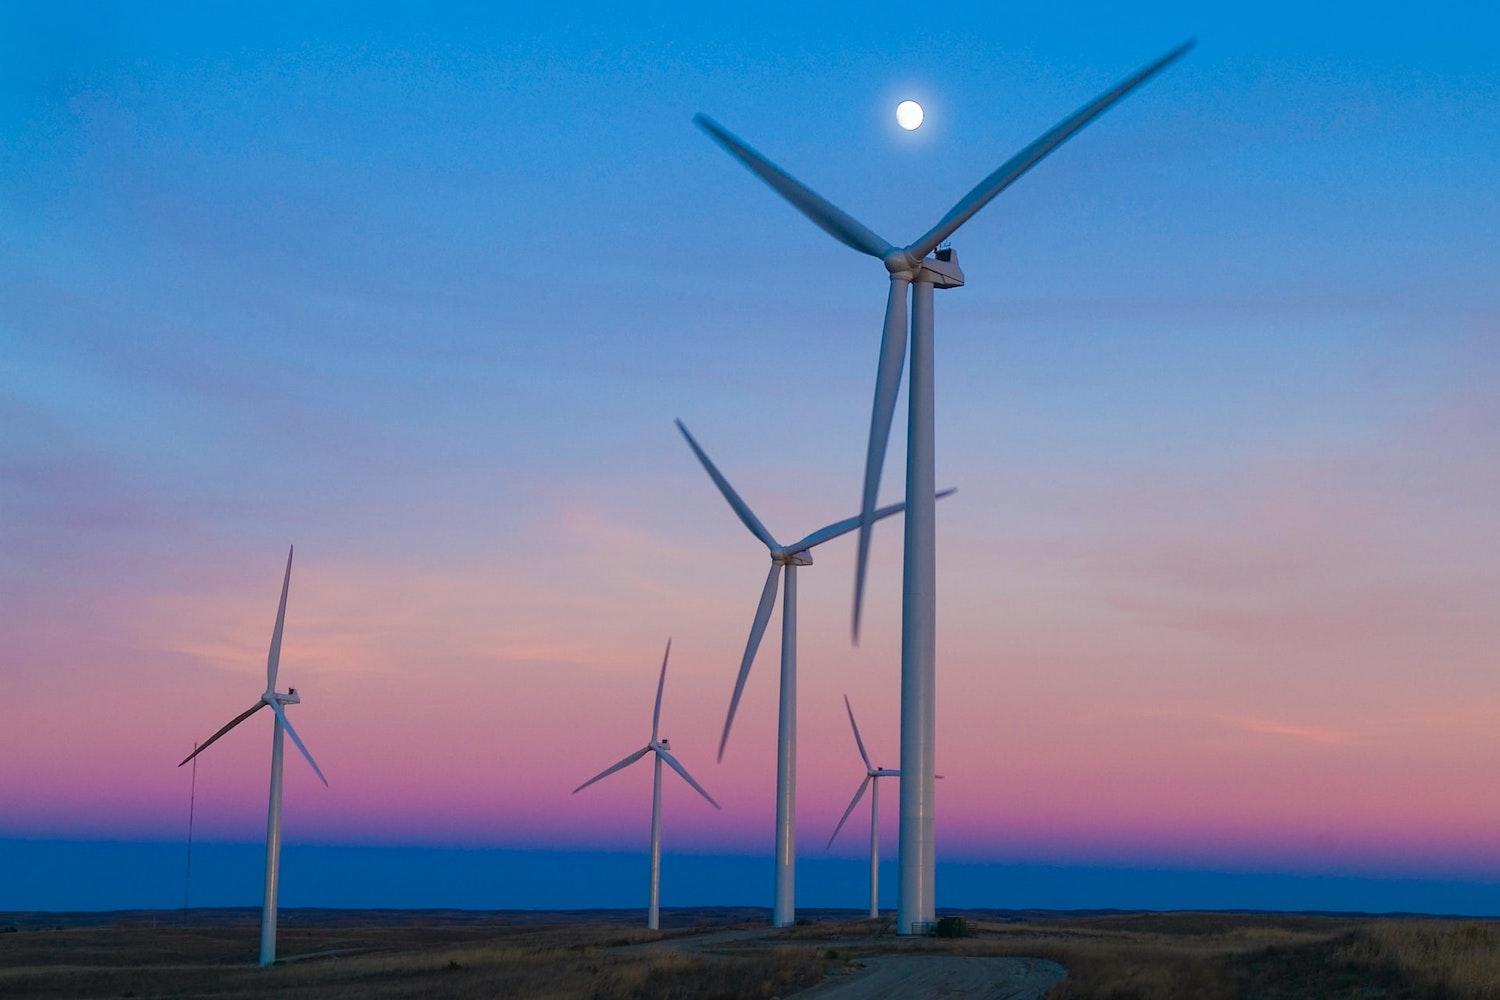 wind farm in nebraska at sunset - clean power